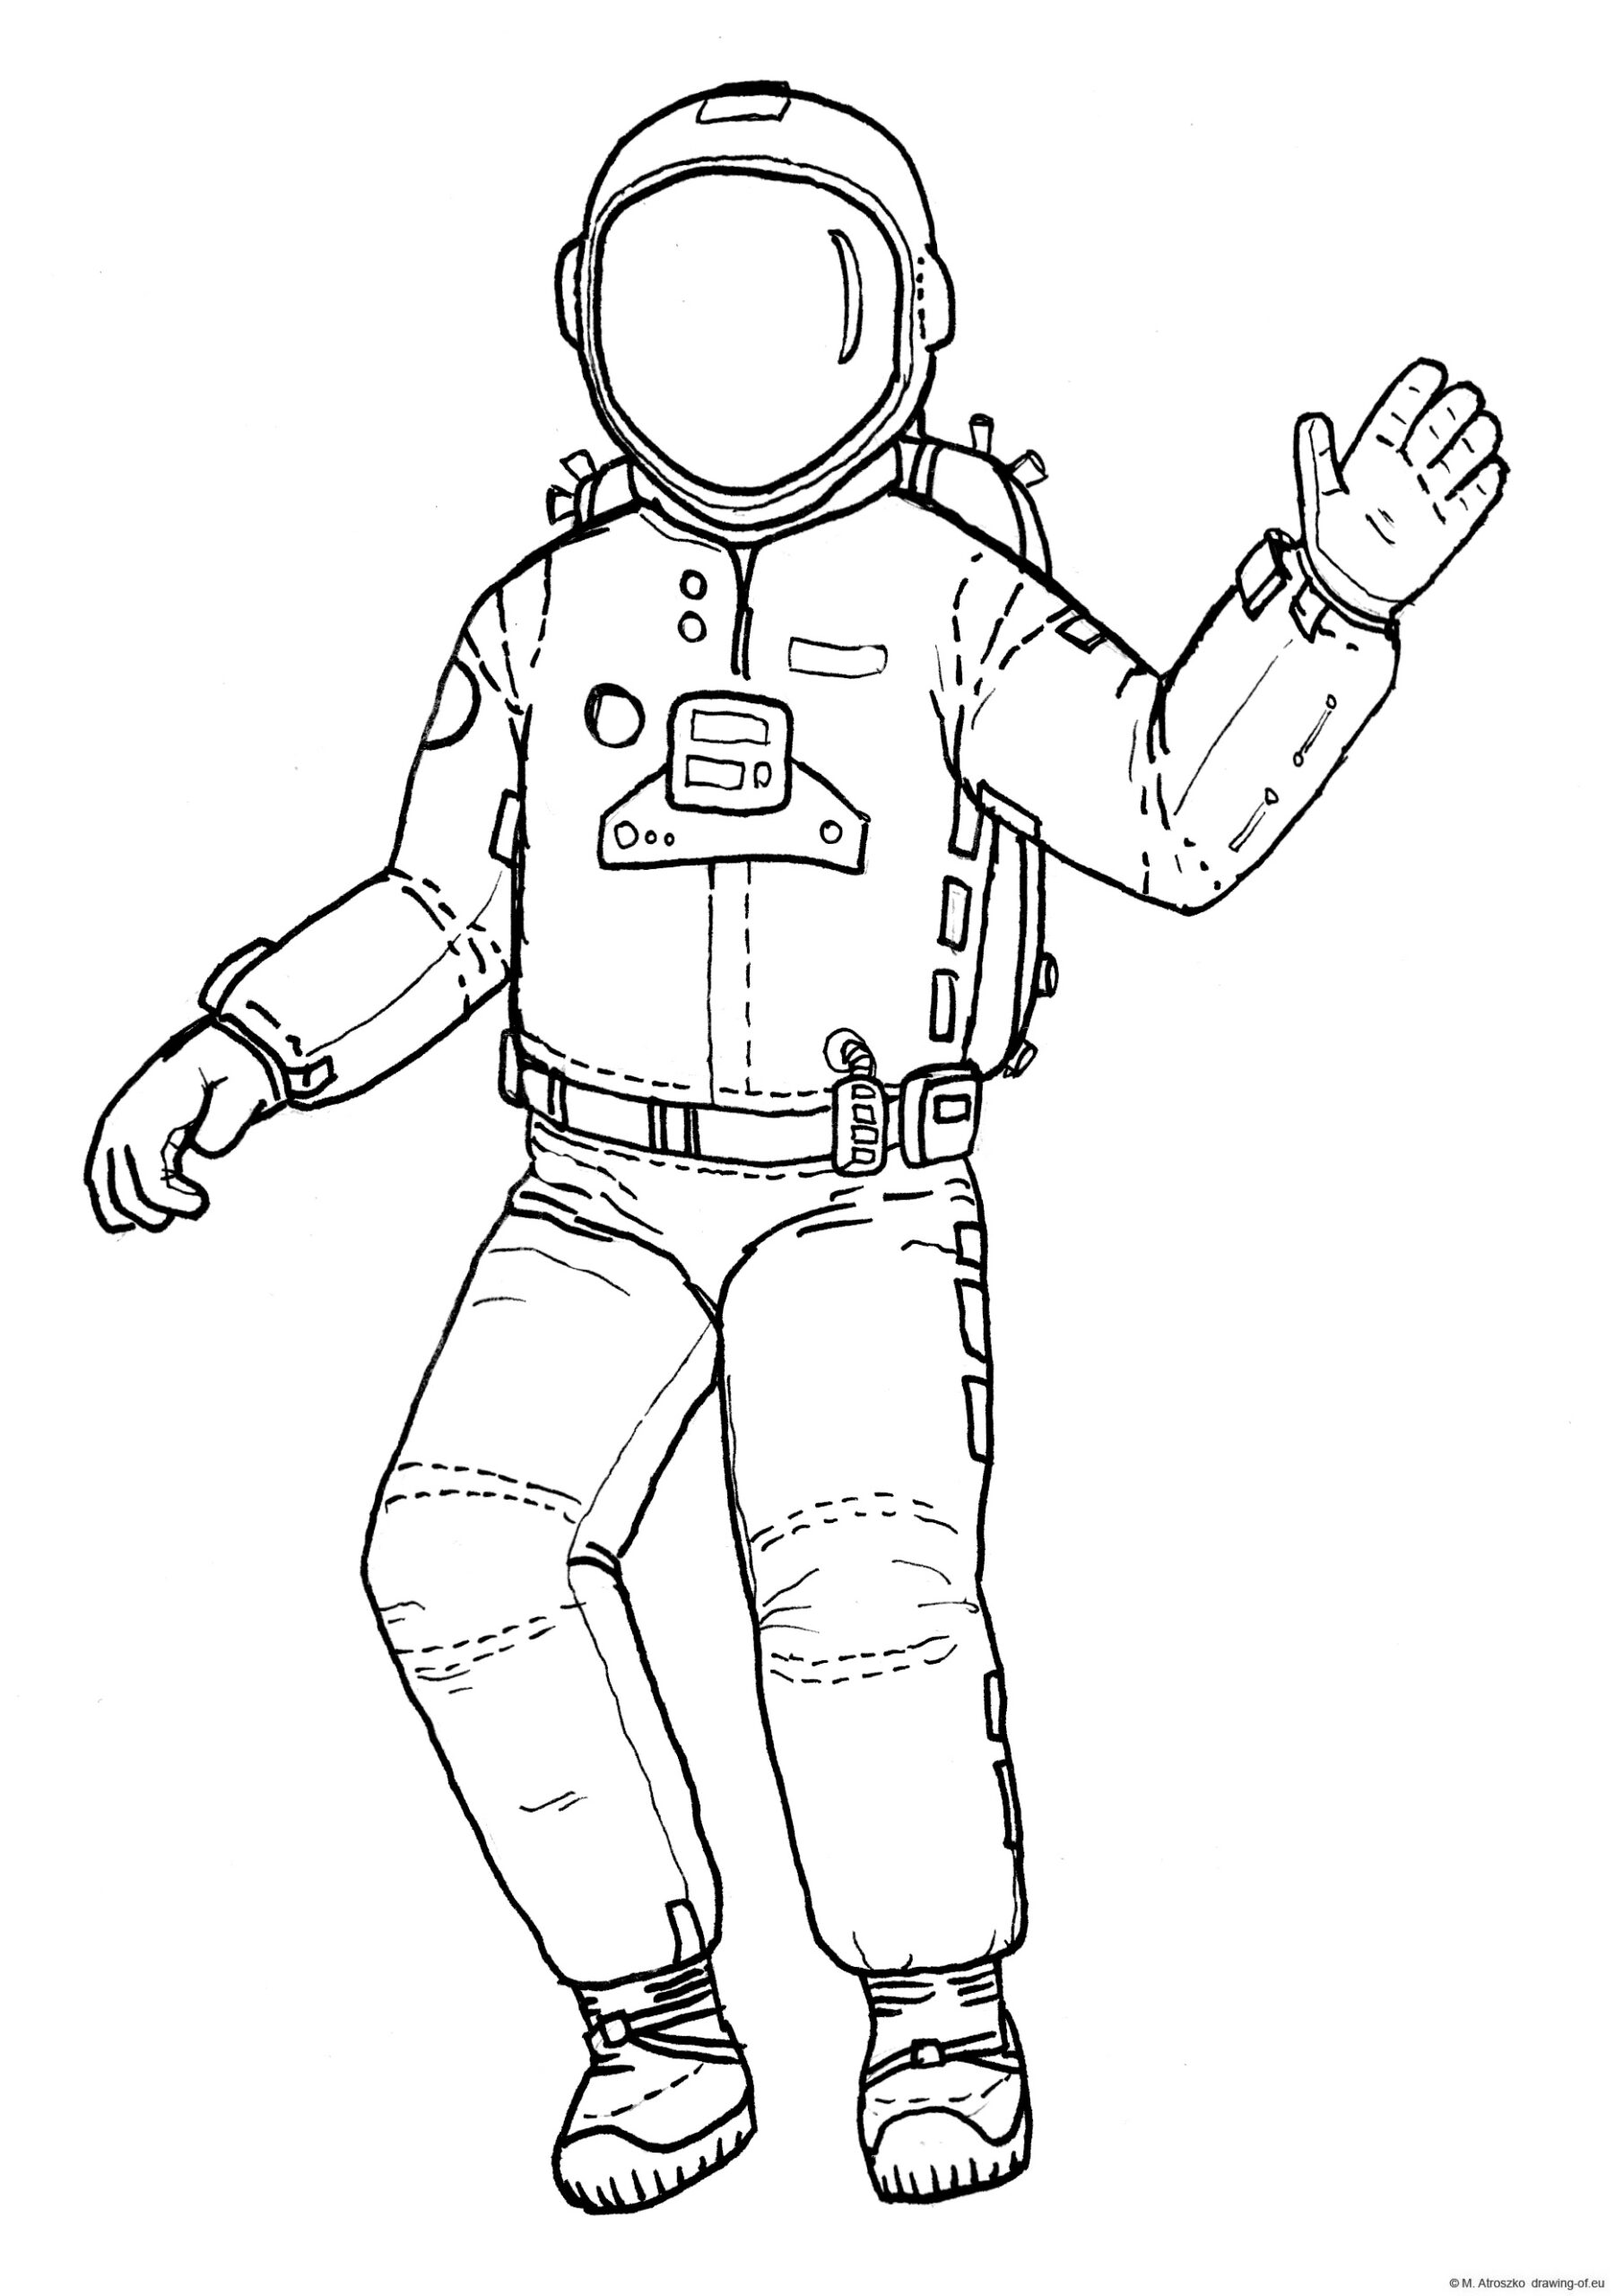 drawing - astronaut